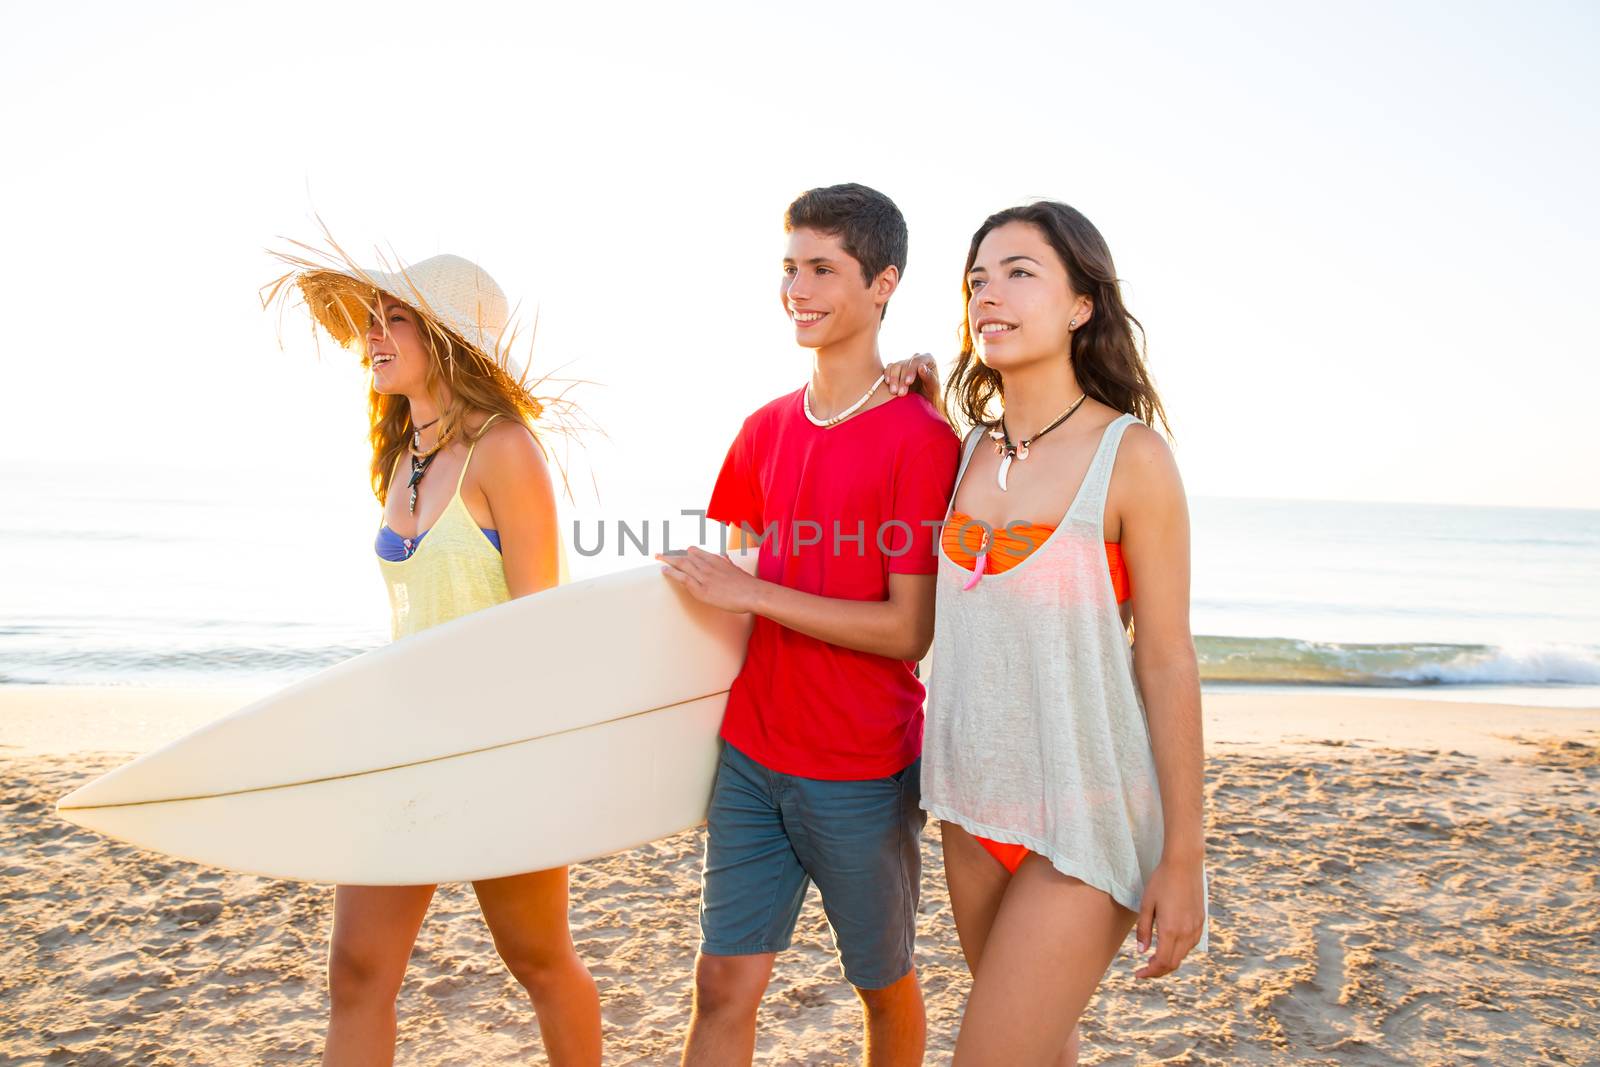 Surfer girls with teen boy walking on beach shore by lunamarina